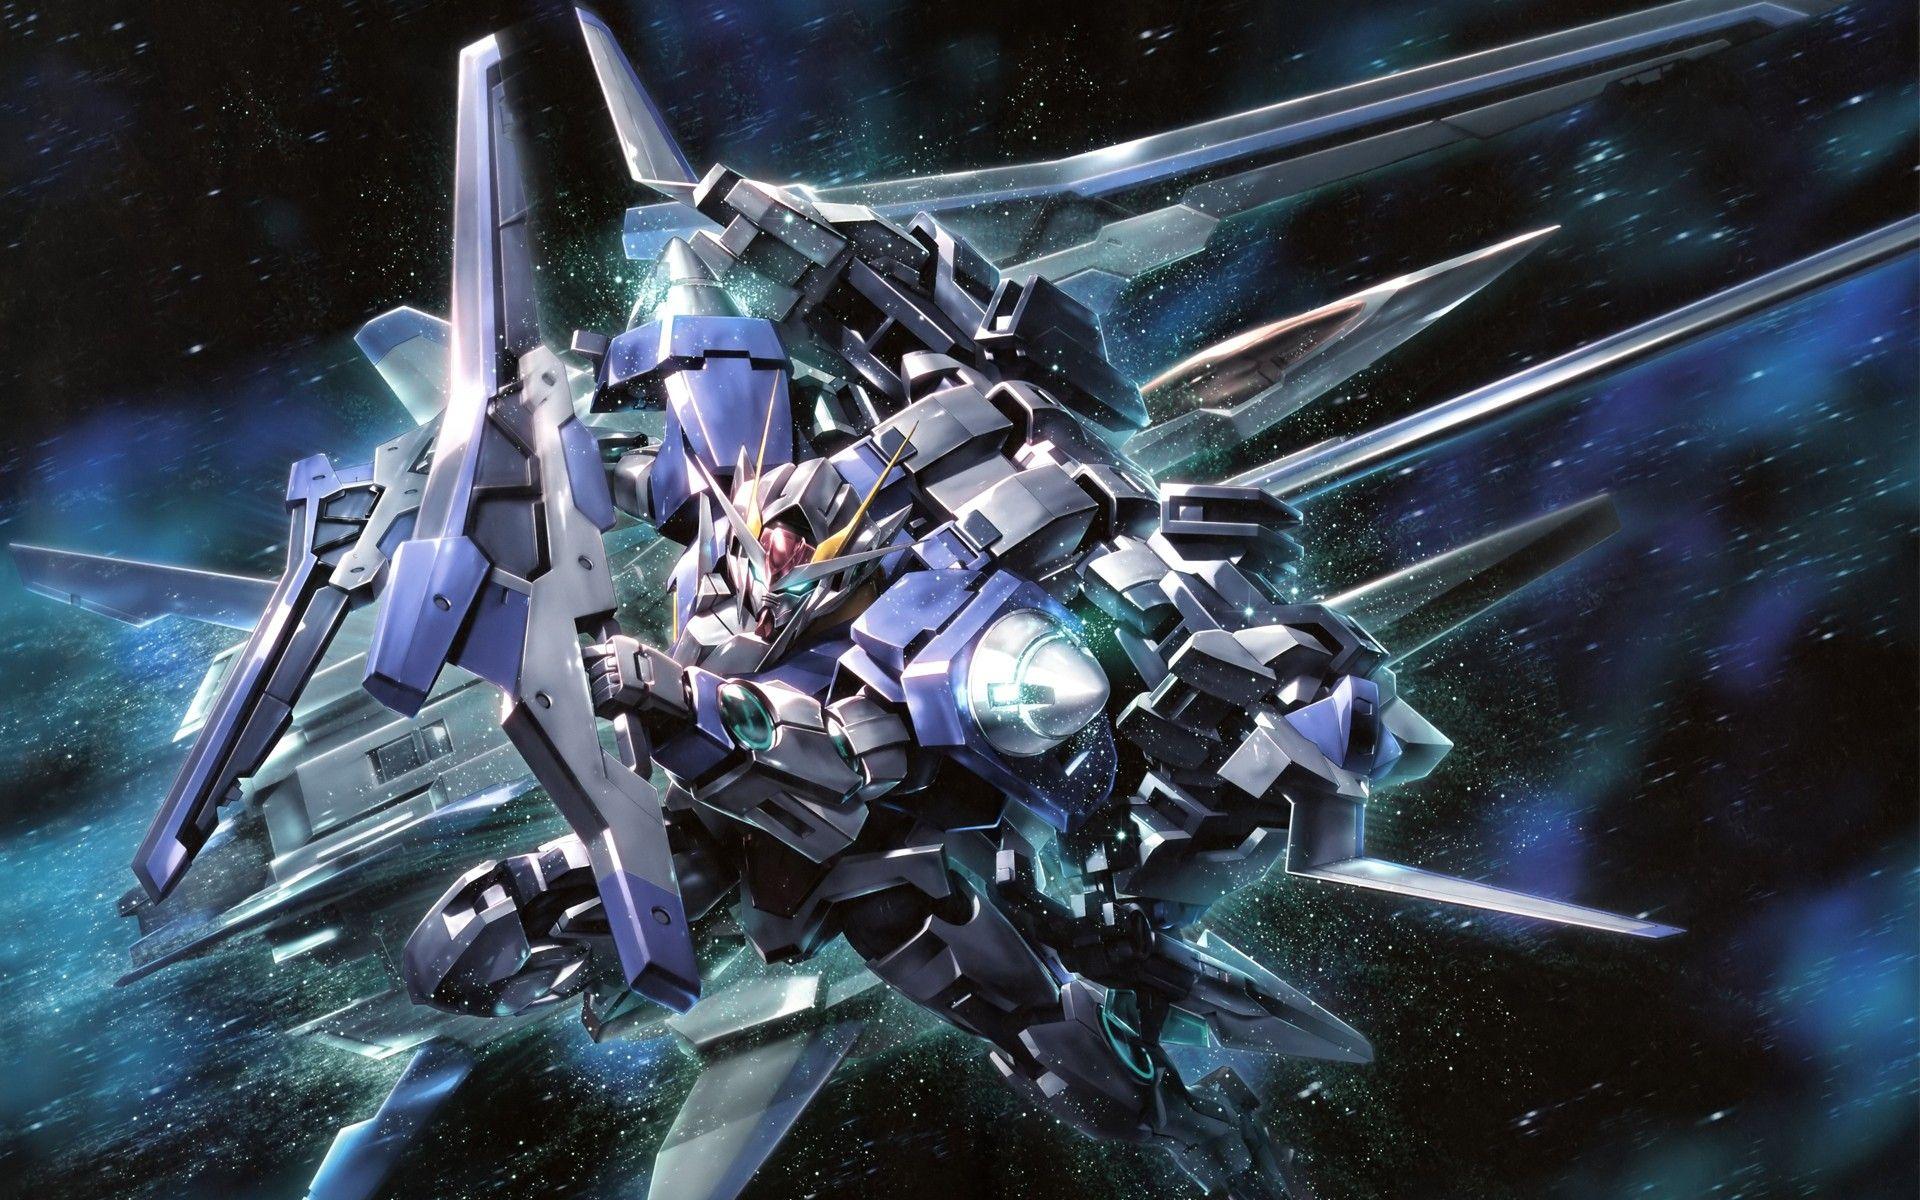 outer space, Gundam, robots, futuristic, mecha, anime, sapce